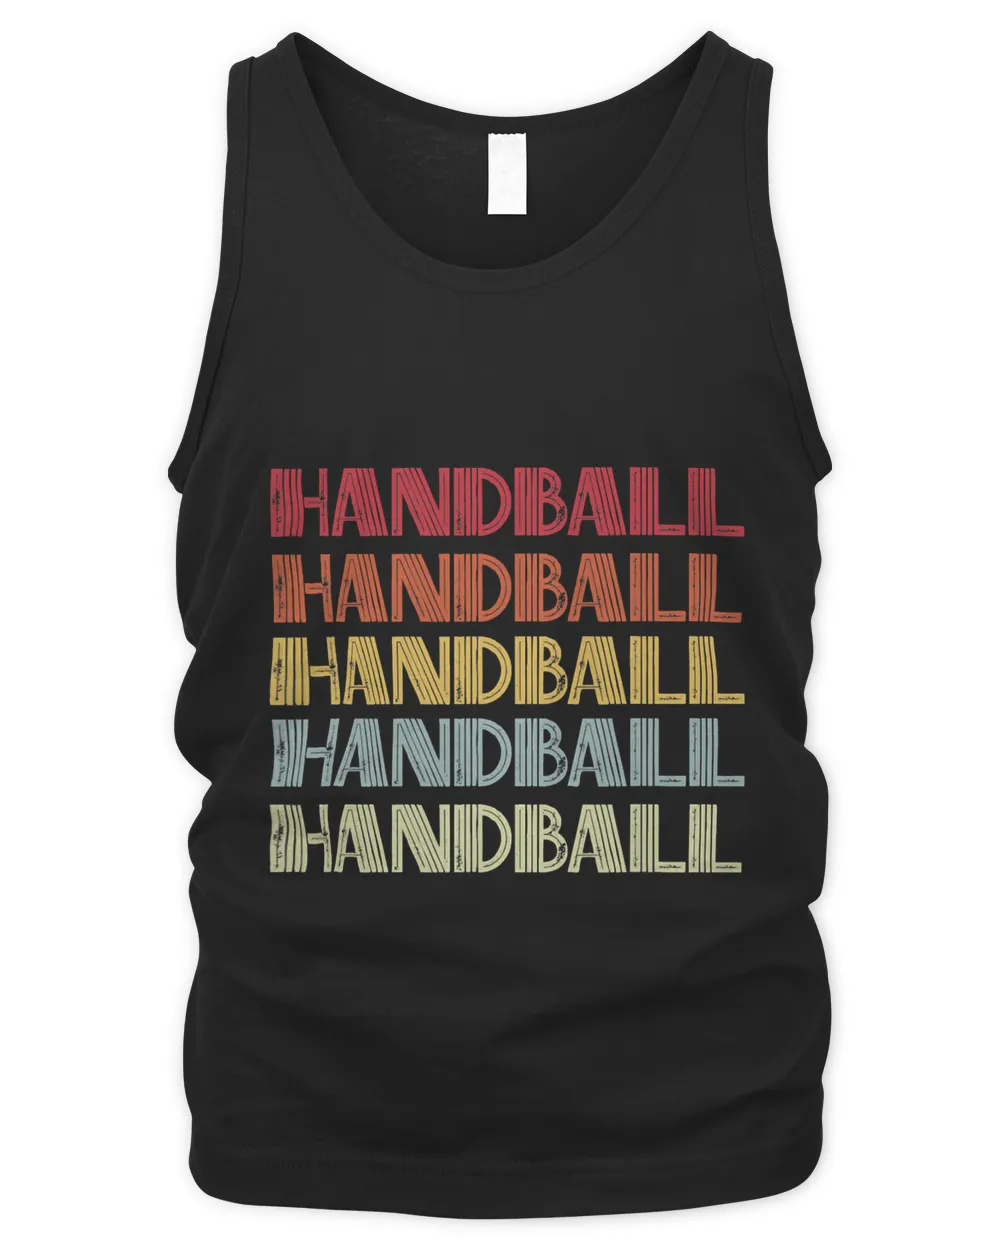 Handball Retro Style Design For Handball Player T-Shirt